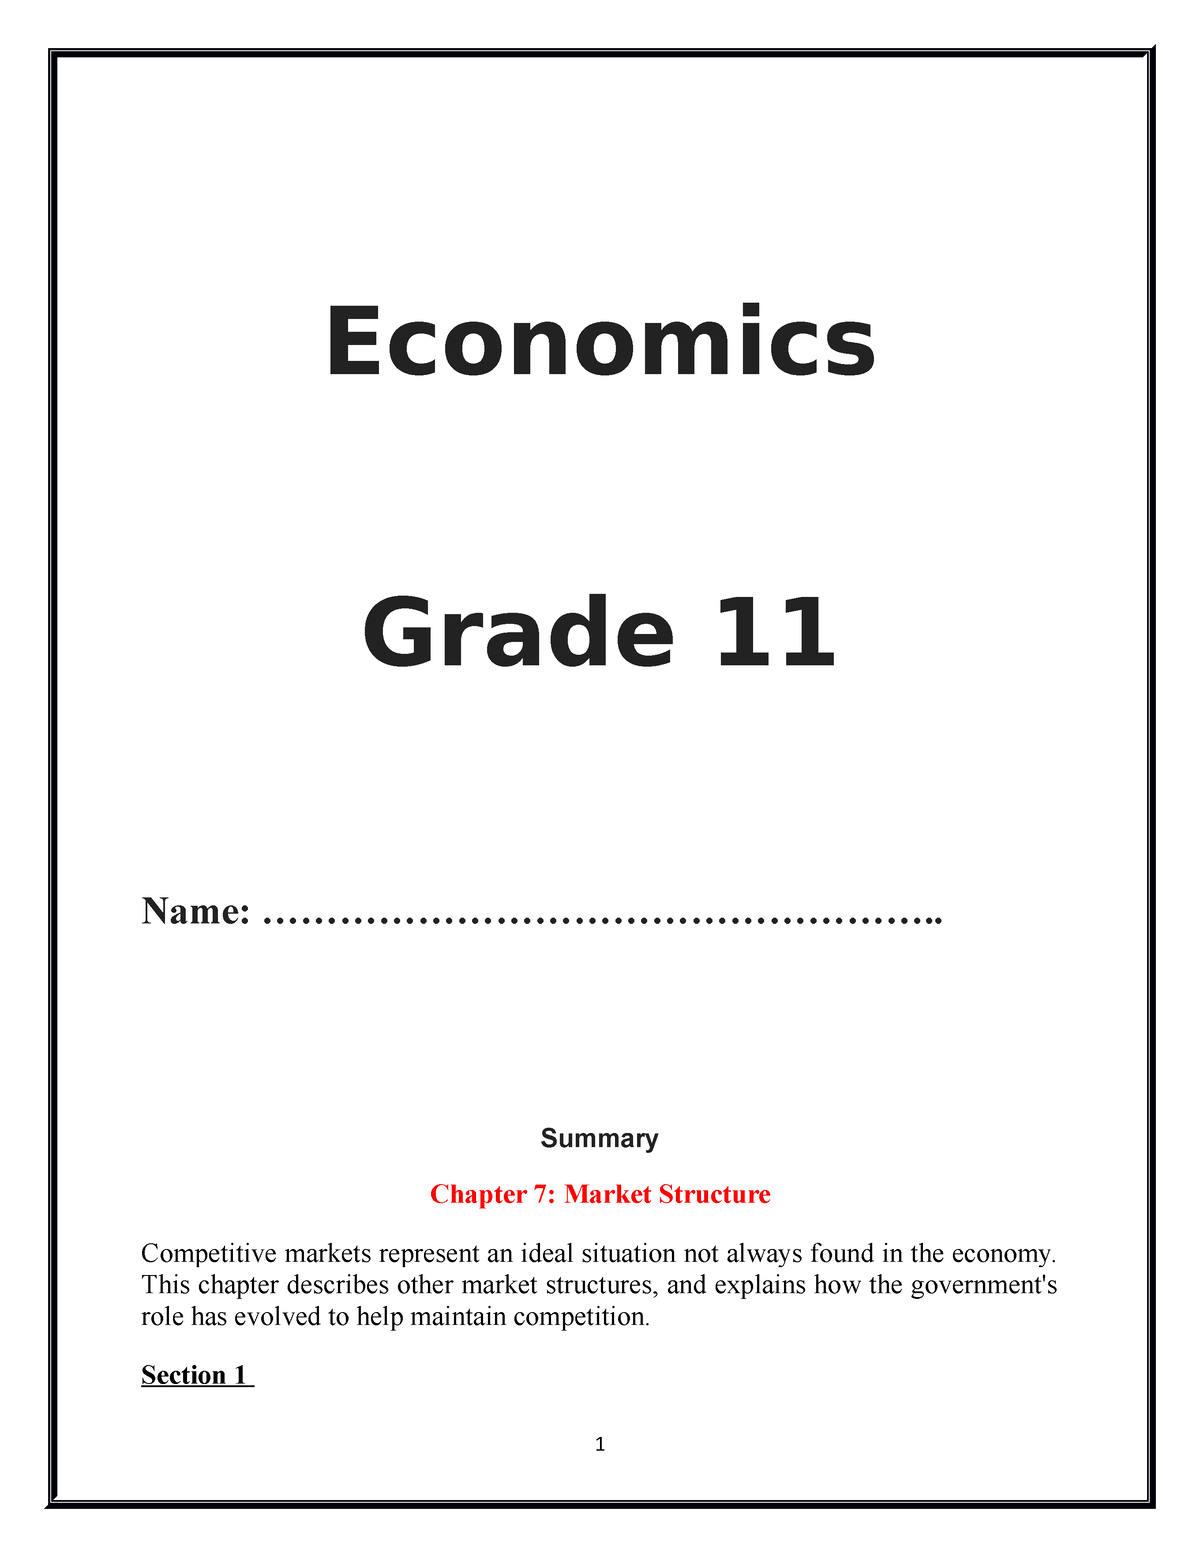 economics grade 11 developing countries essay